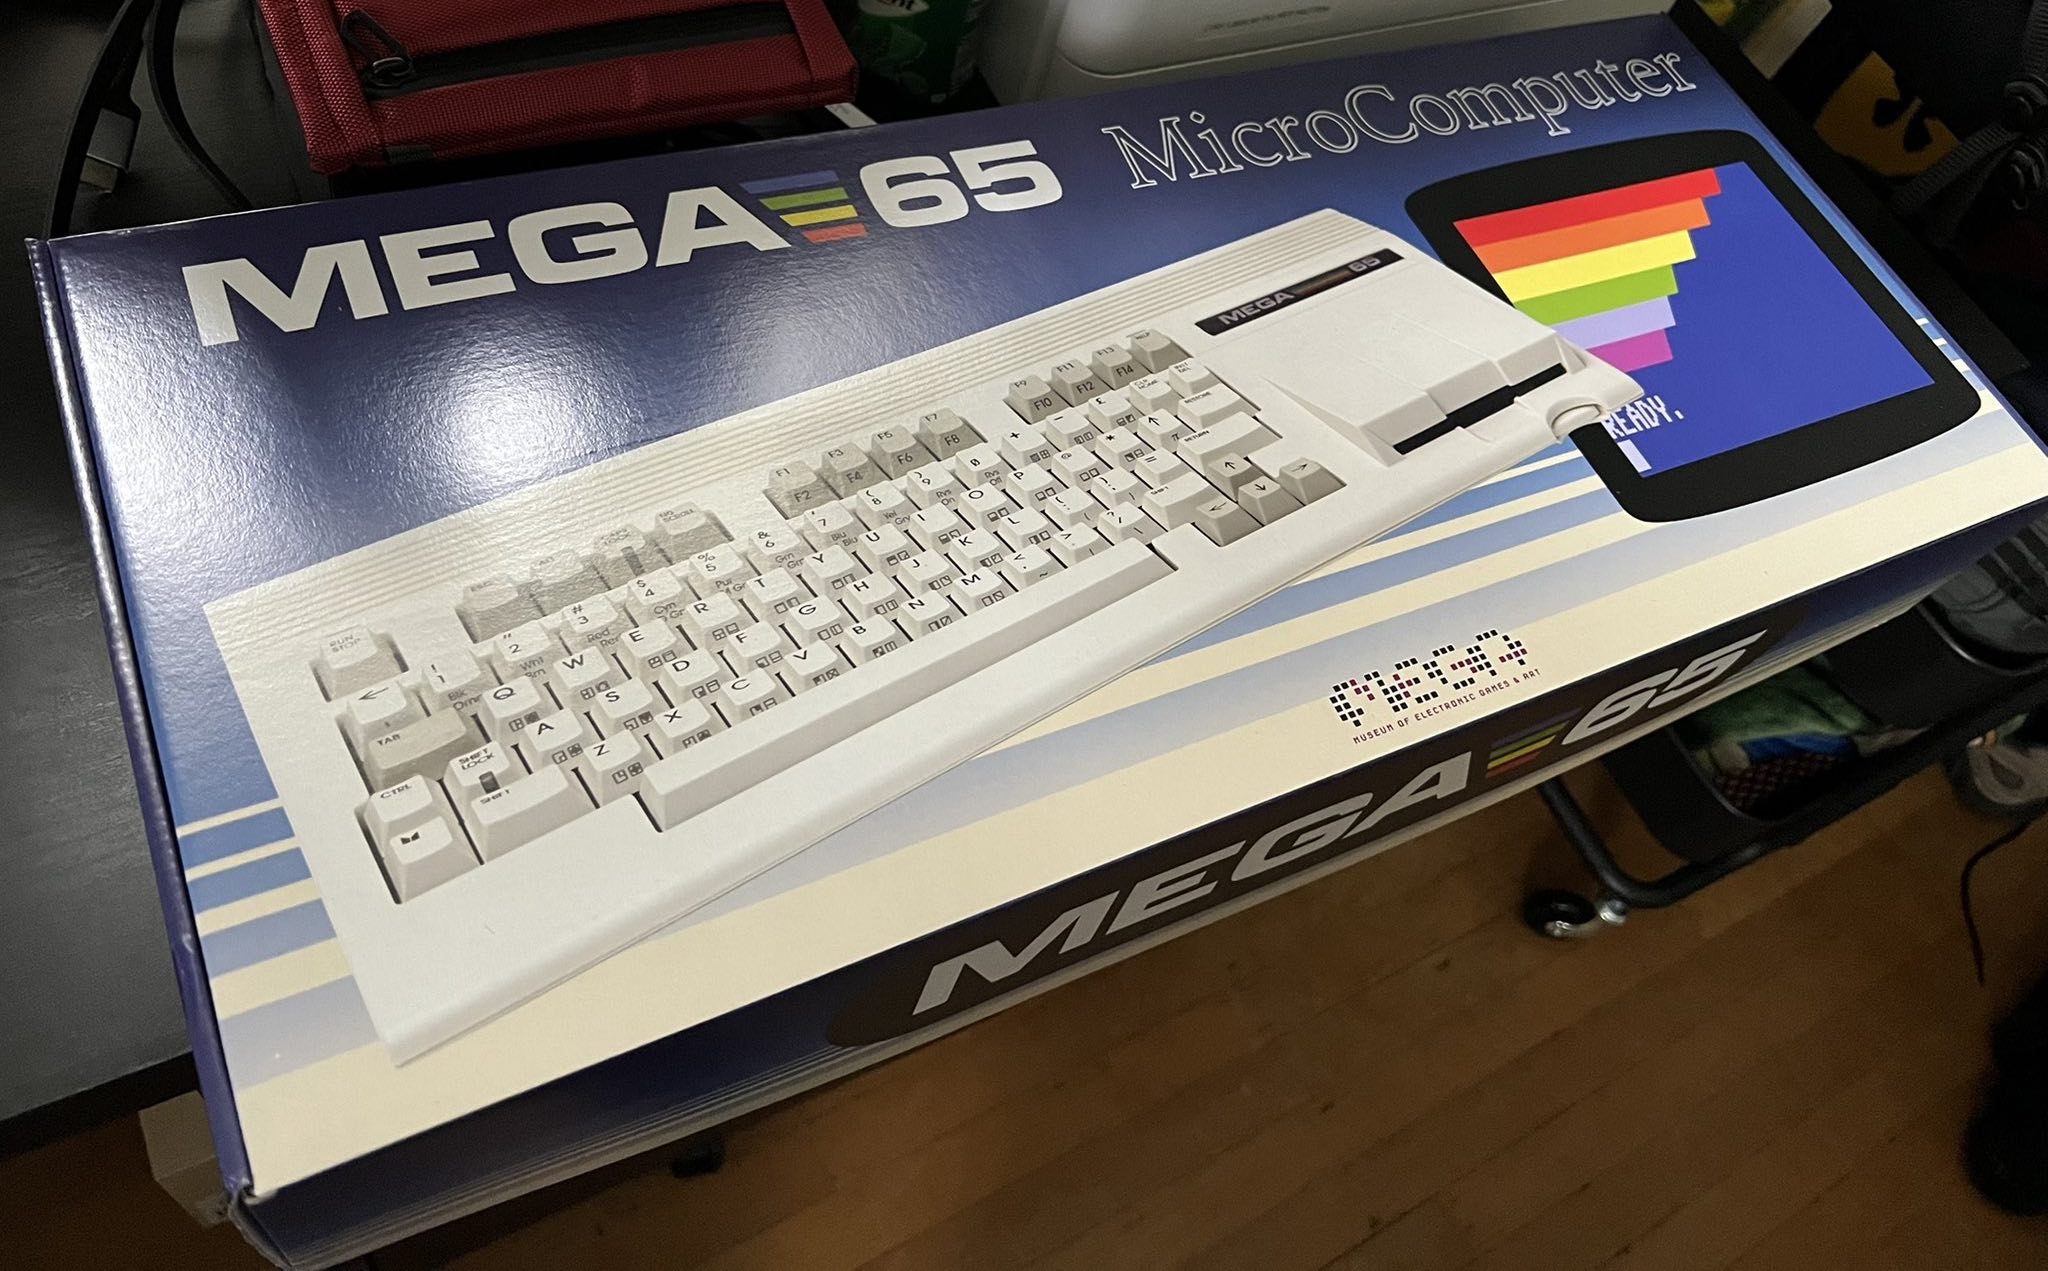 The MEGA65 box, with authentic design